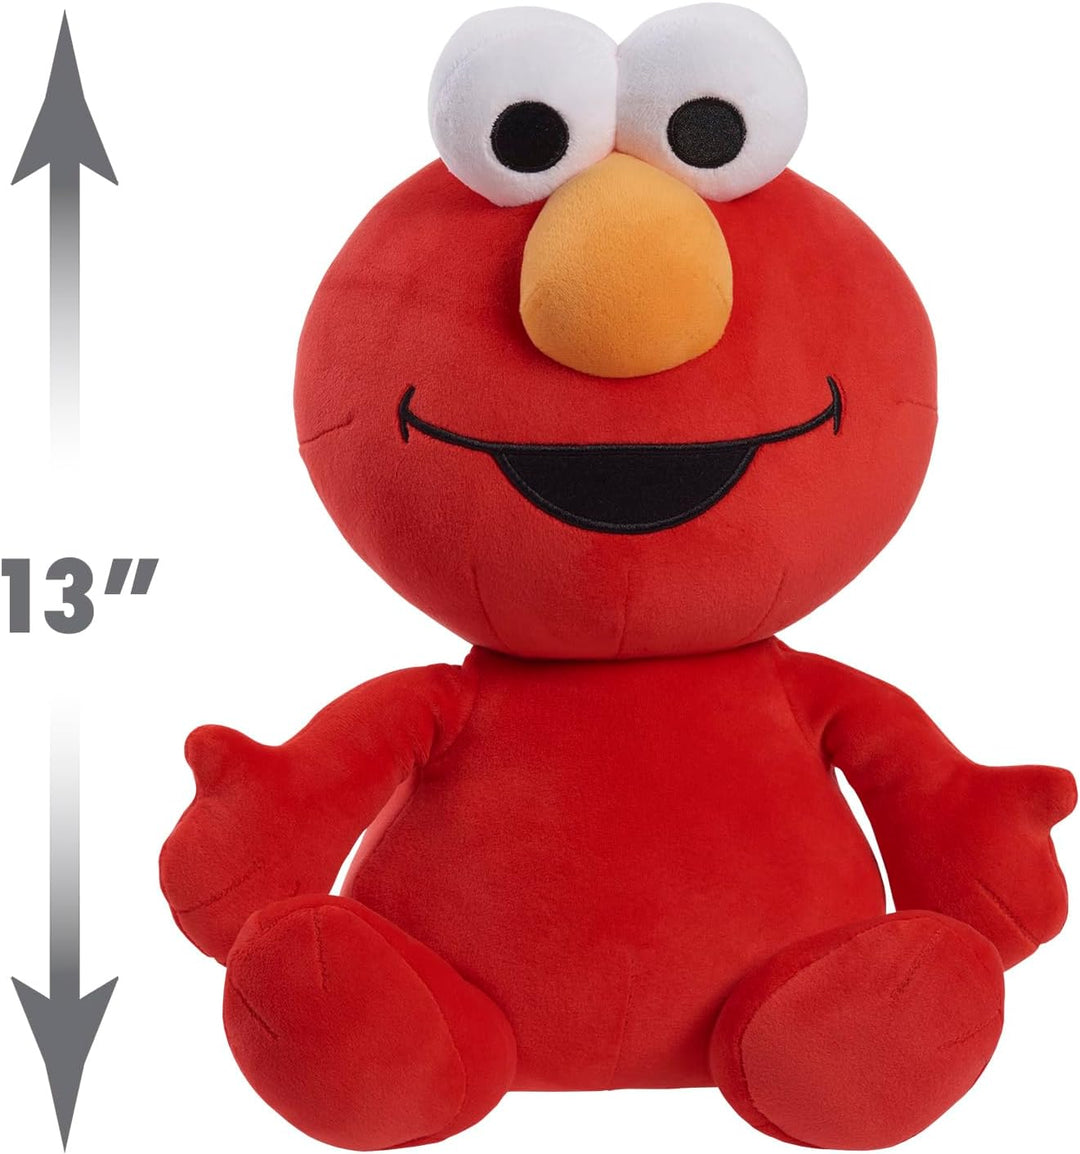 Sesame Street Weighted Comfort Plush Elmo